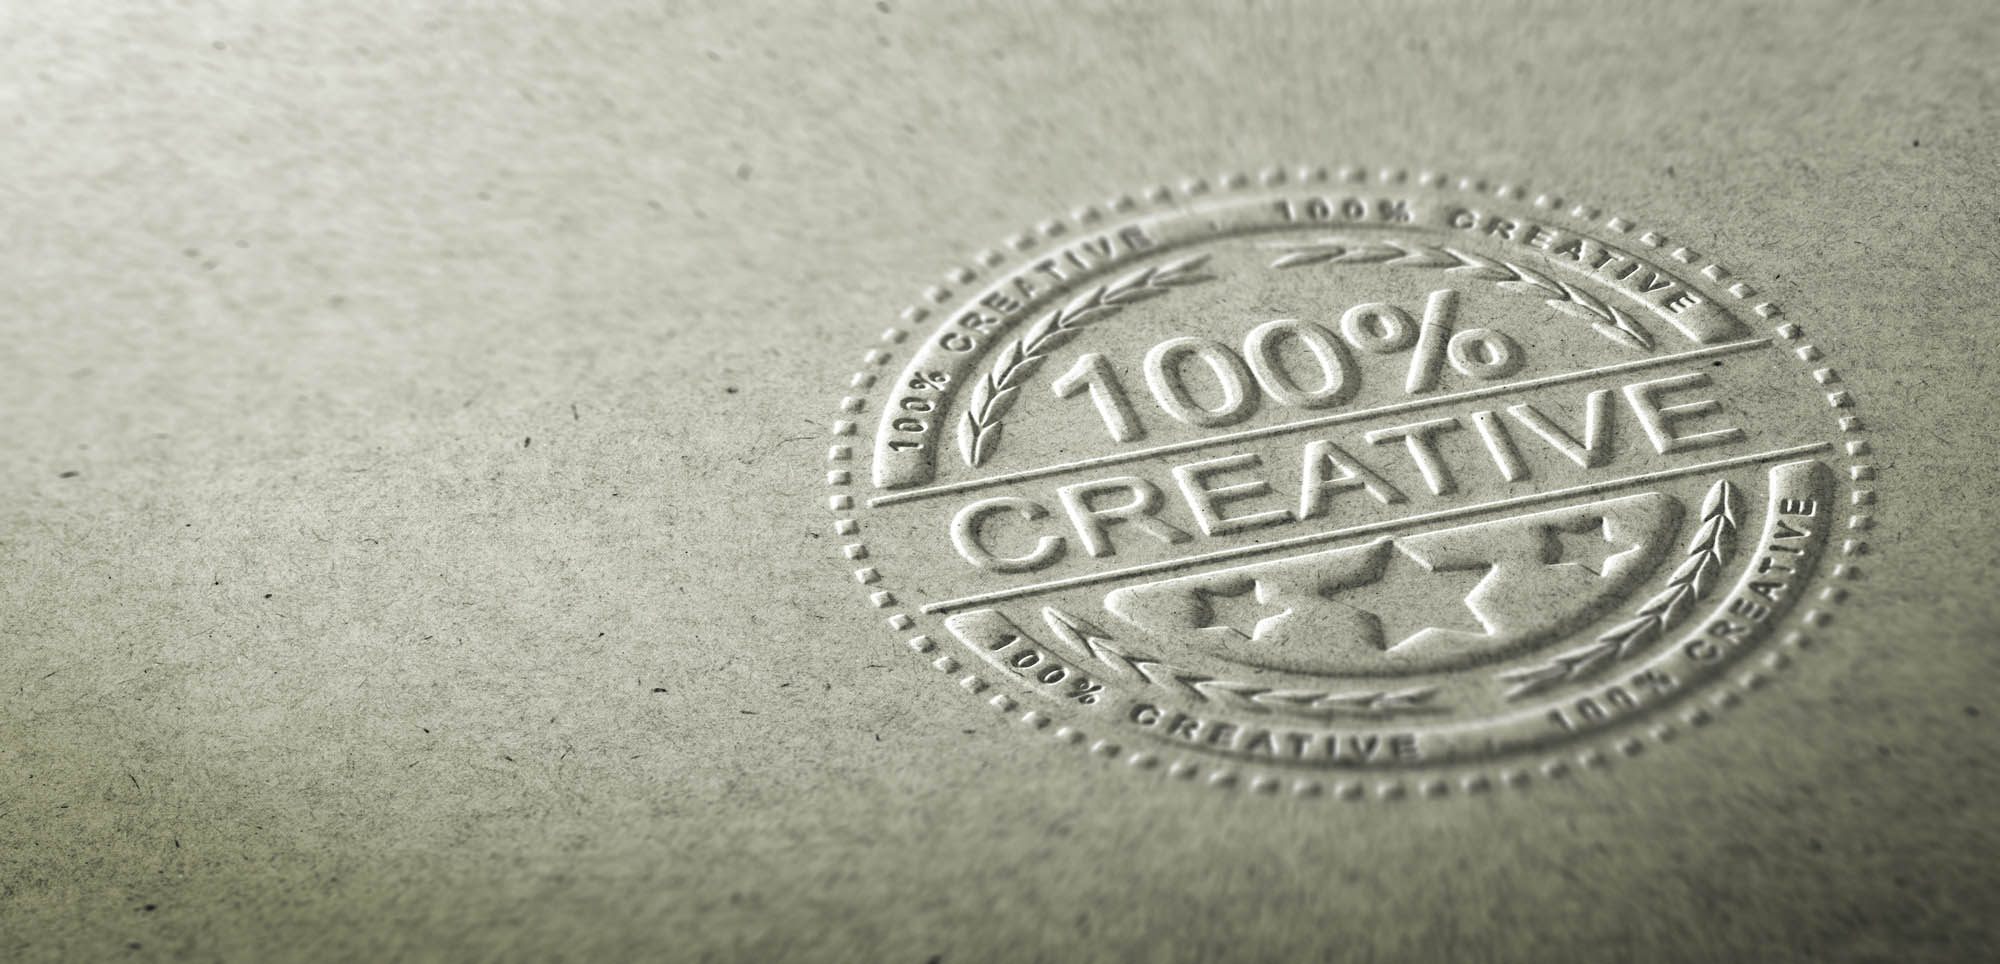 100% Creative - Werbeagentur Selisky Design UG